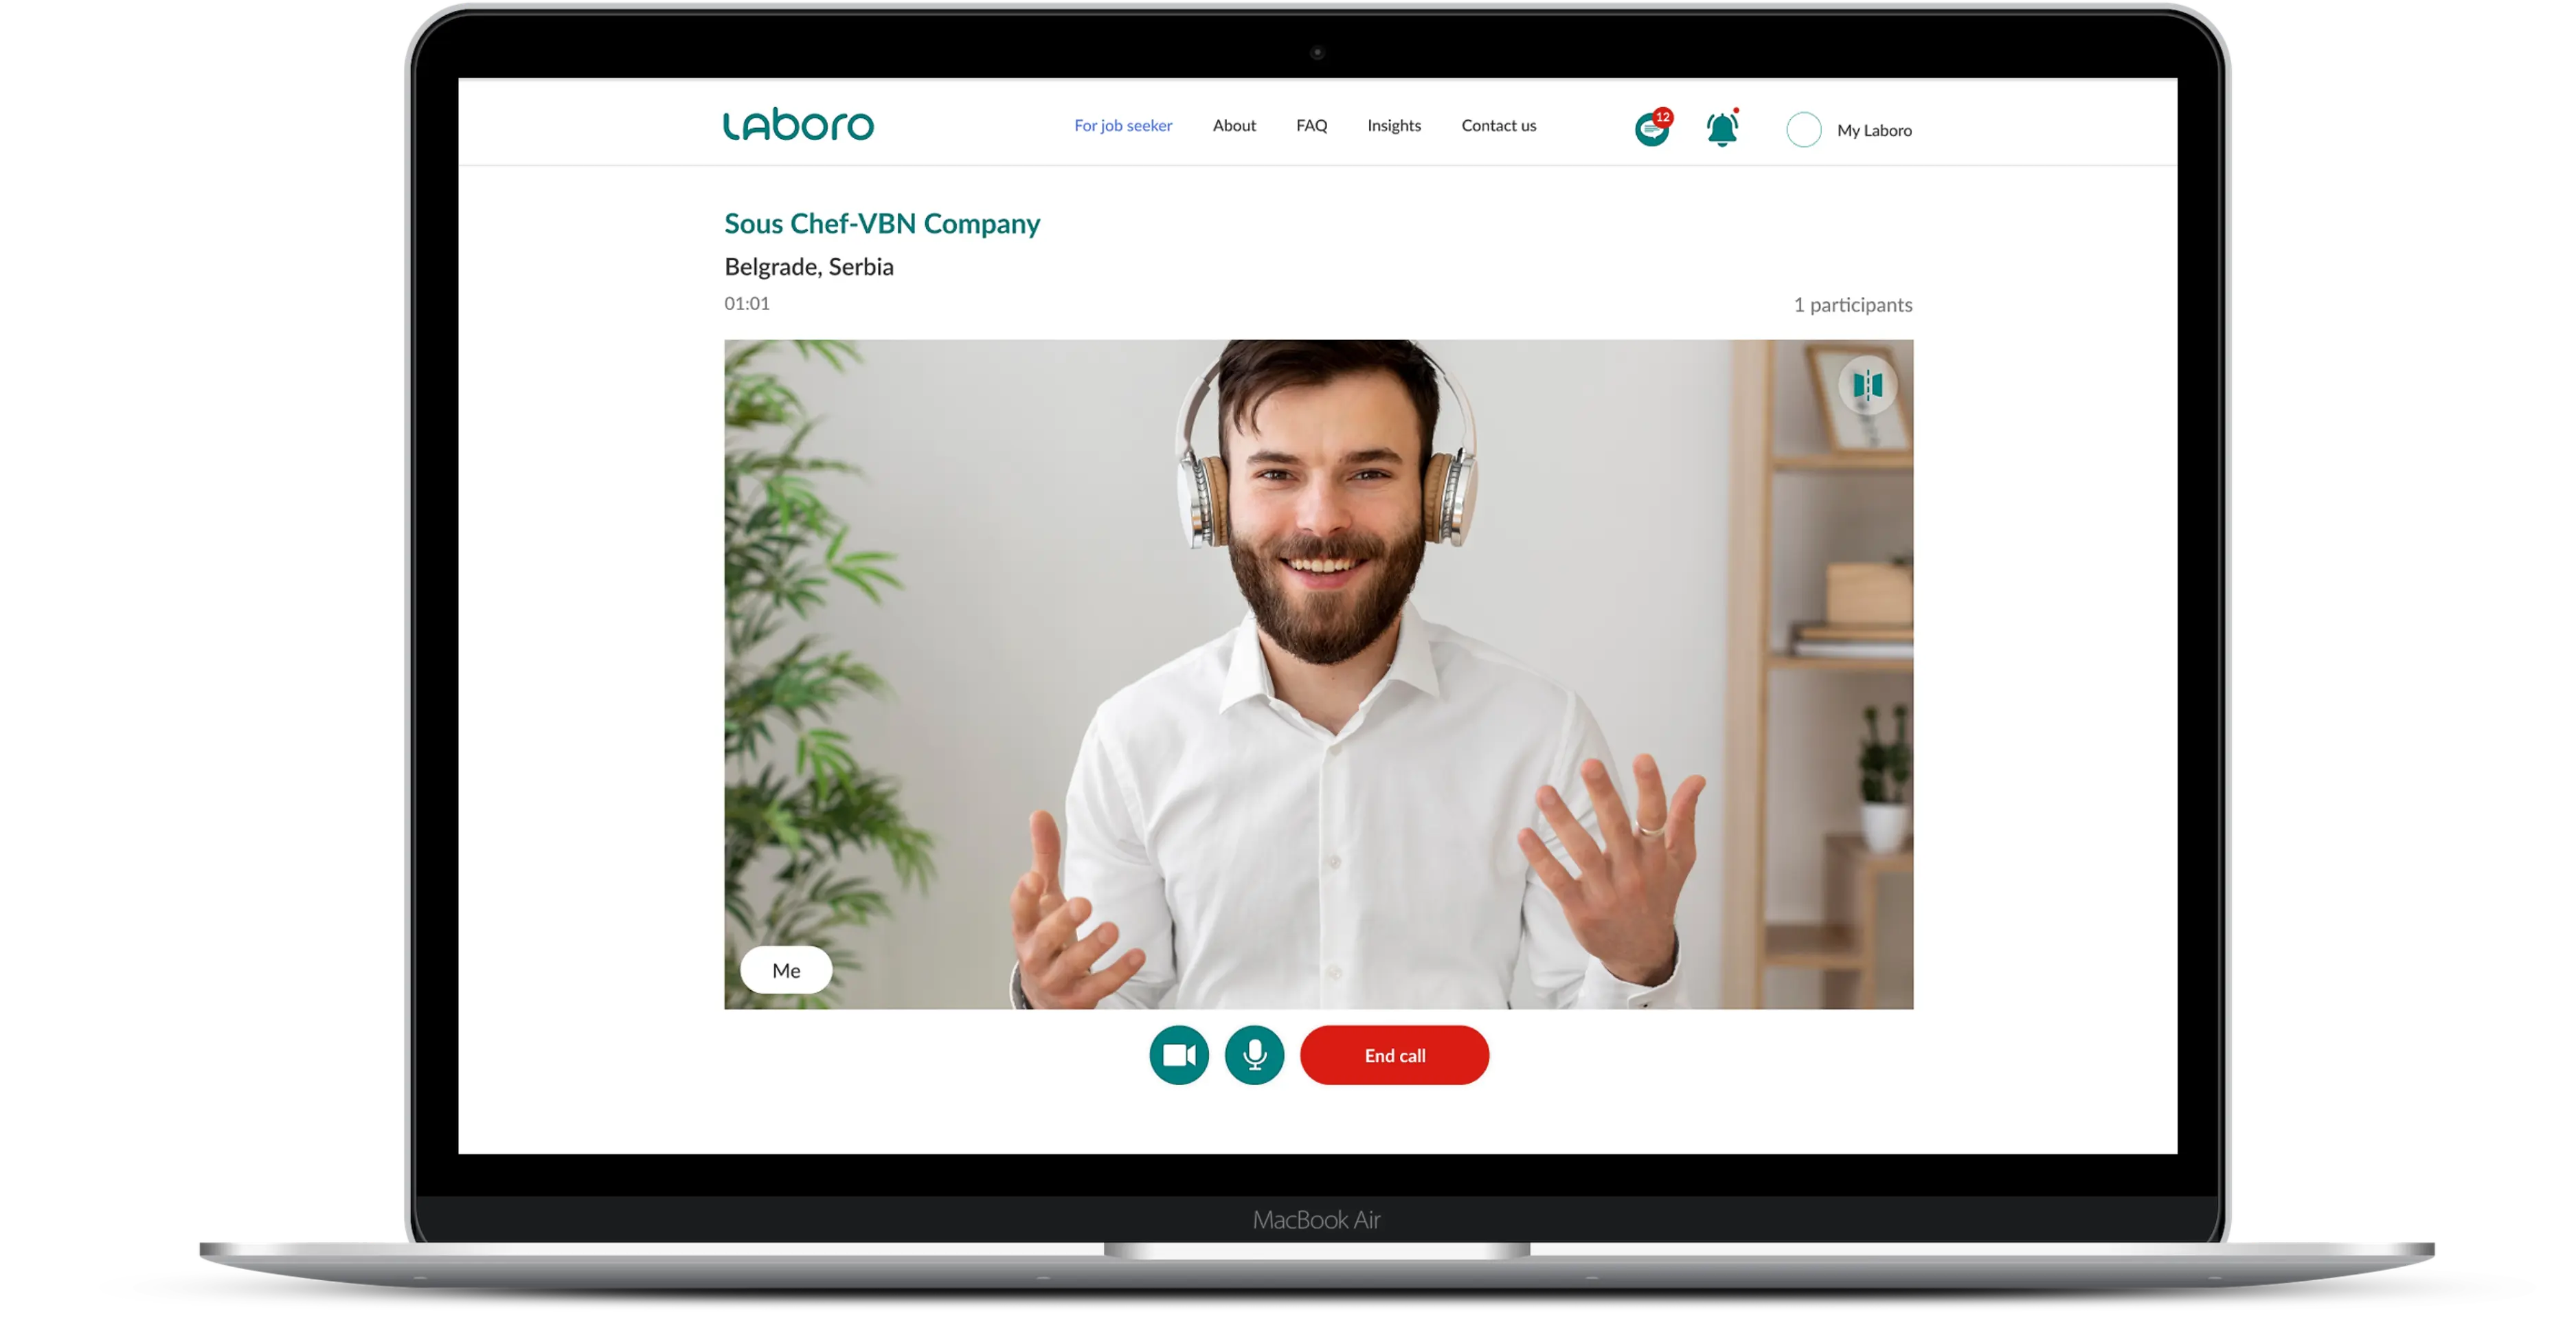 Video Interview on Laboro app